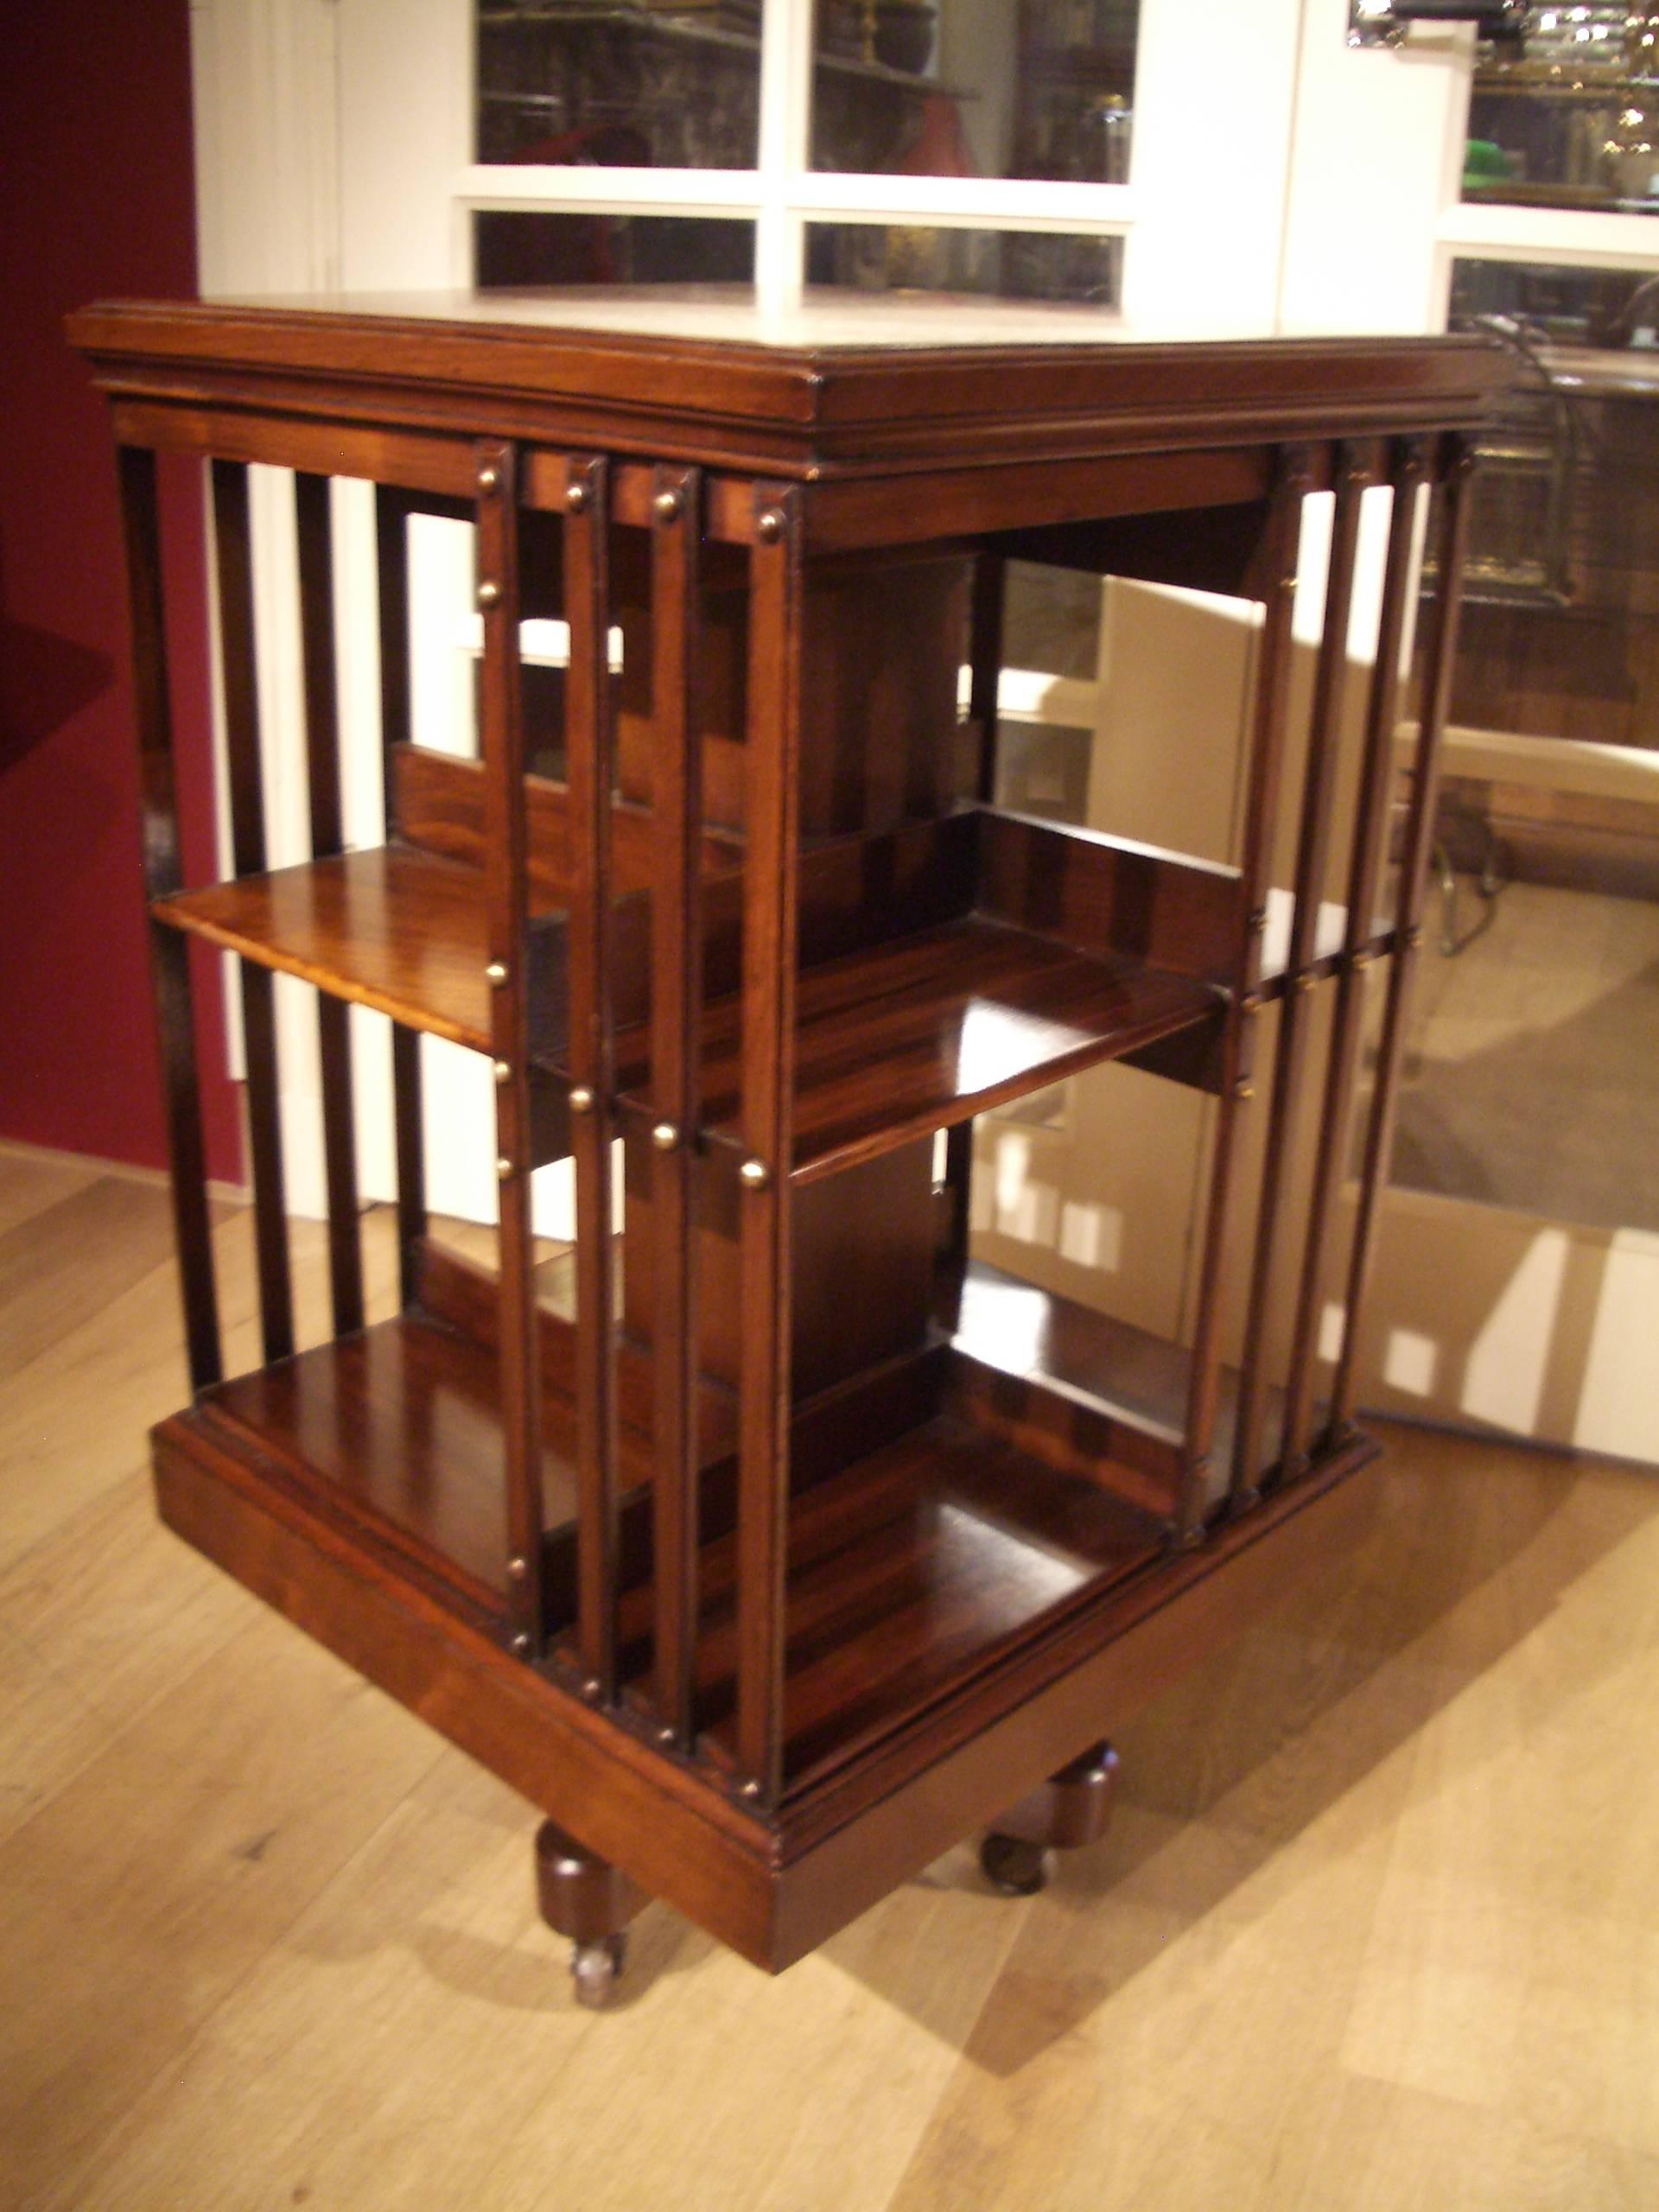 Great Britain (UK) Superb 19th Century Mahogany Revolving Bookcase